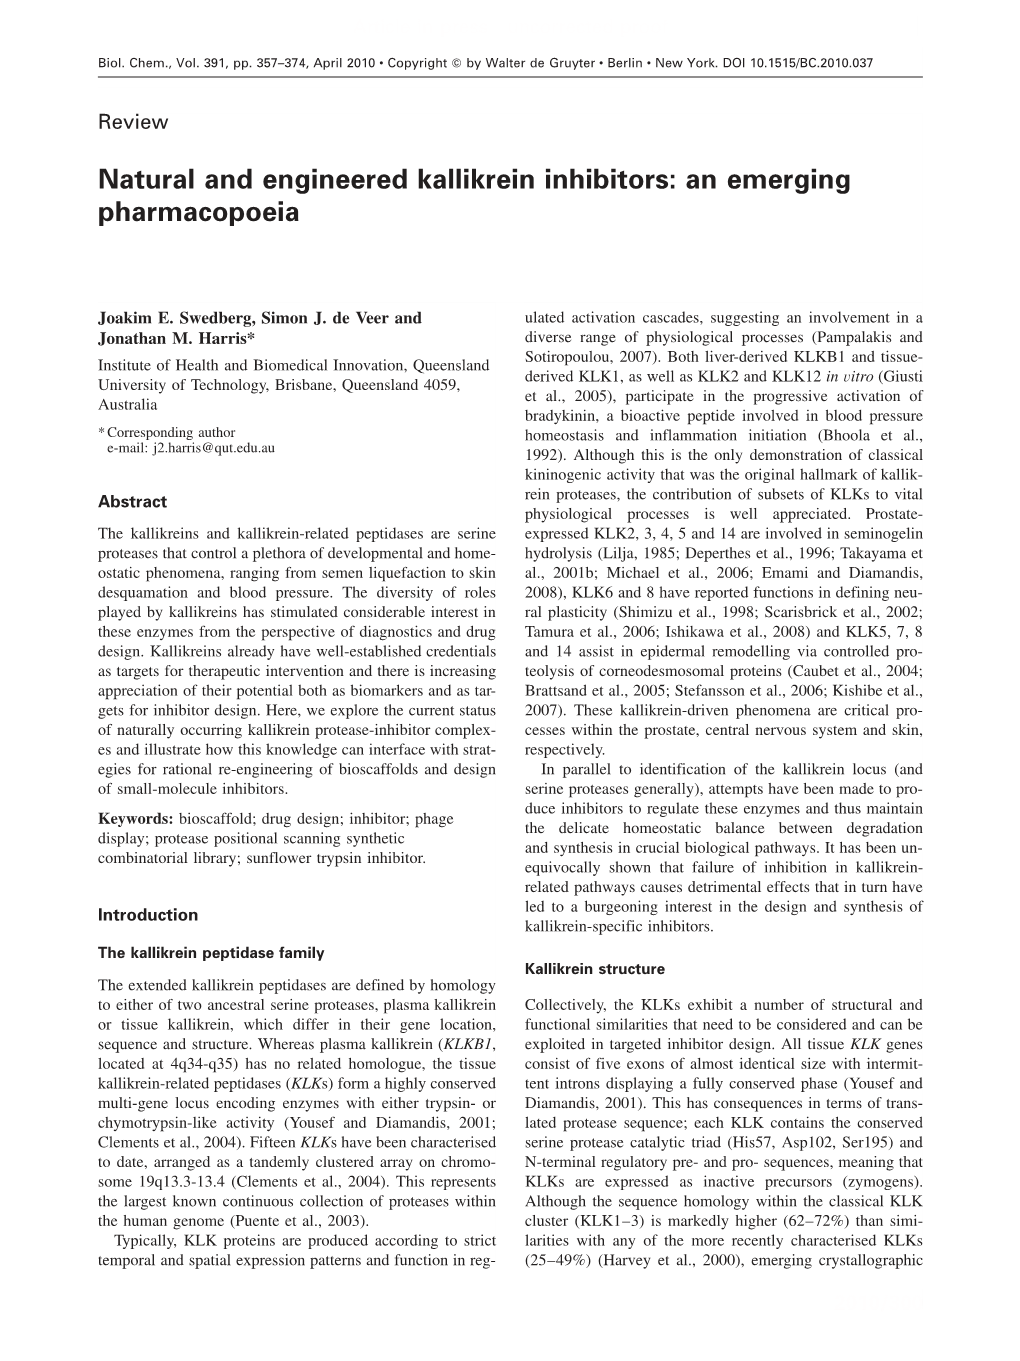 Natural and Engineered Kallikrein Inhibitors: an Emerging Pharmacopoeia